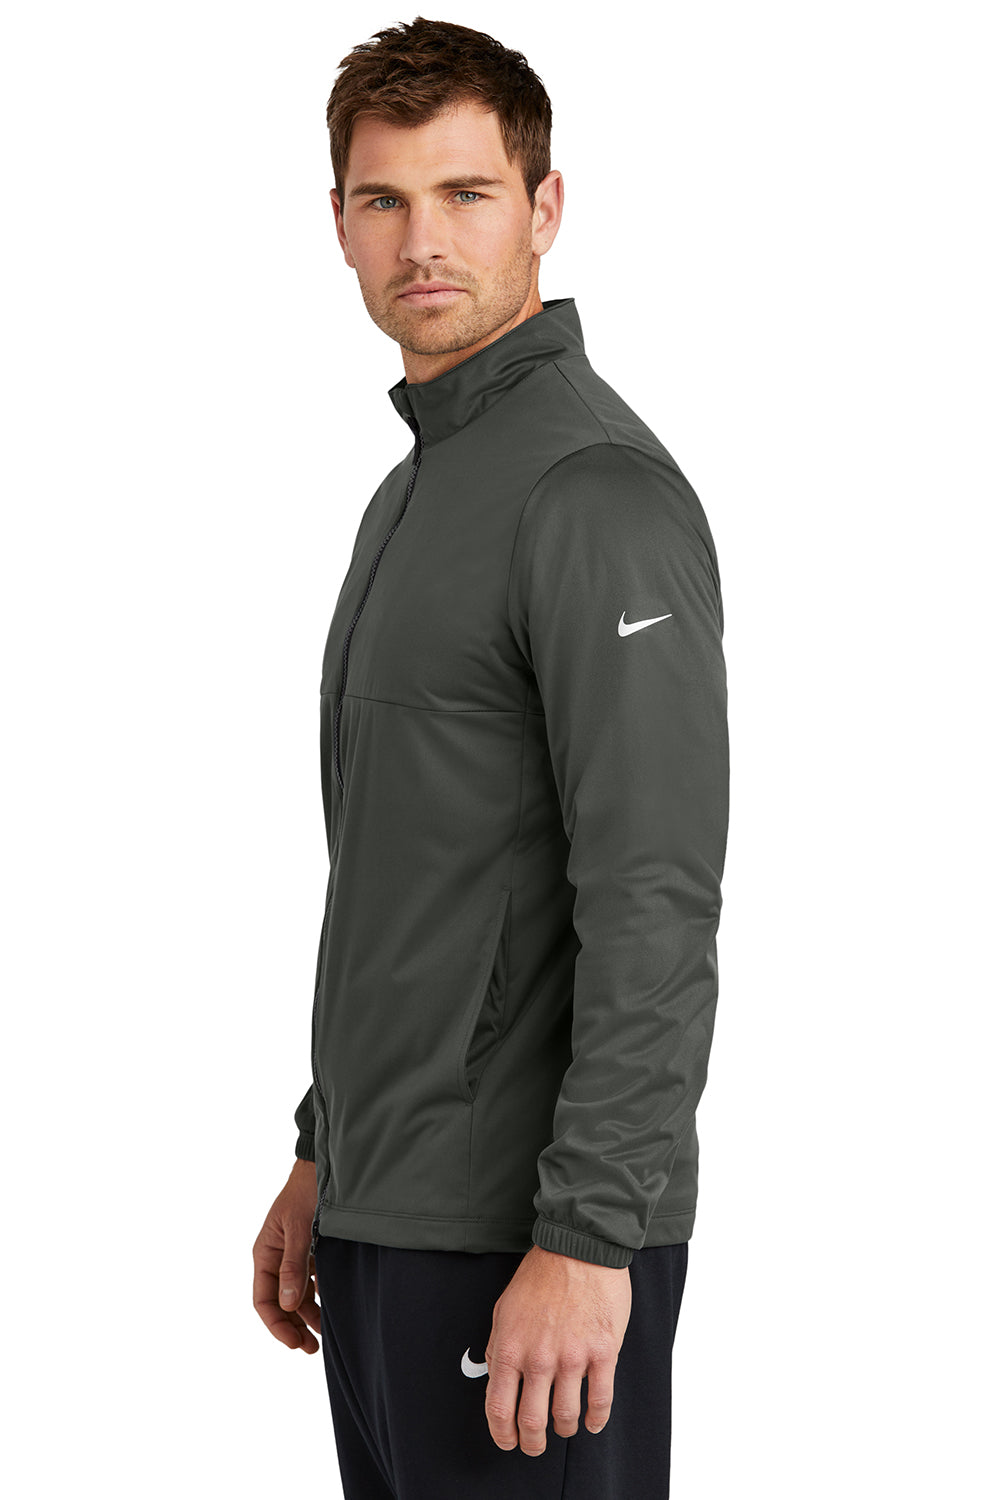 Nike NKDX6716 Mens Storm-Fit Wind & Water Resistant Full Zip Jacket Anthracite Grey Model Side